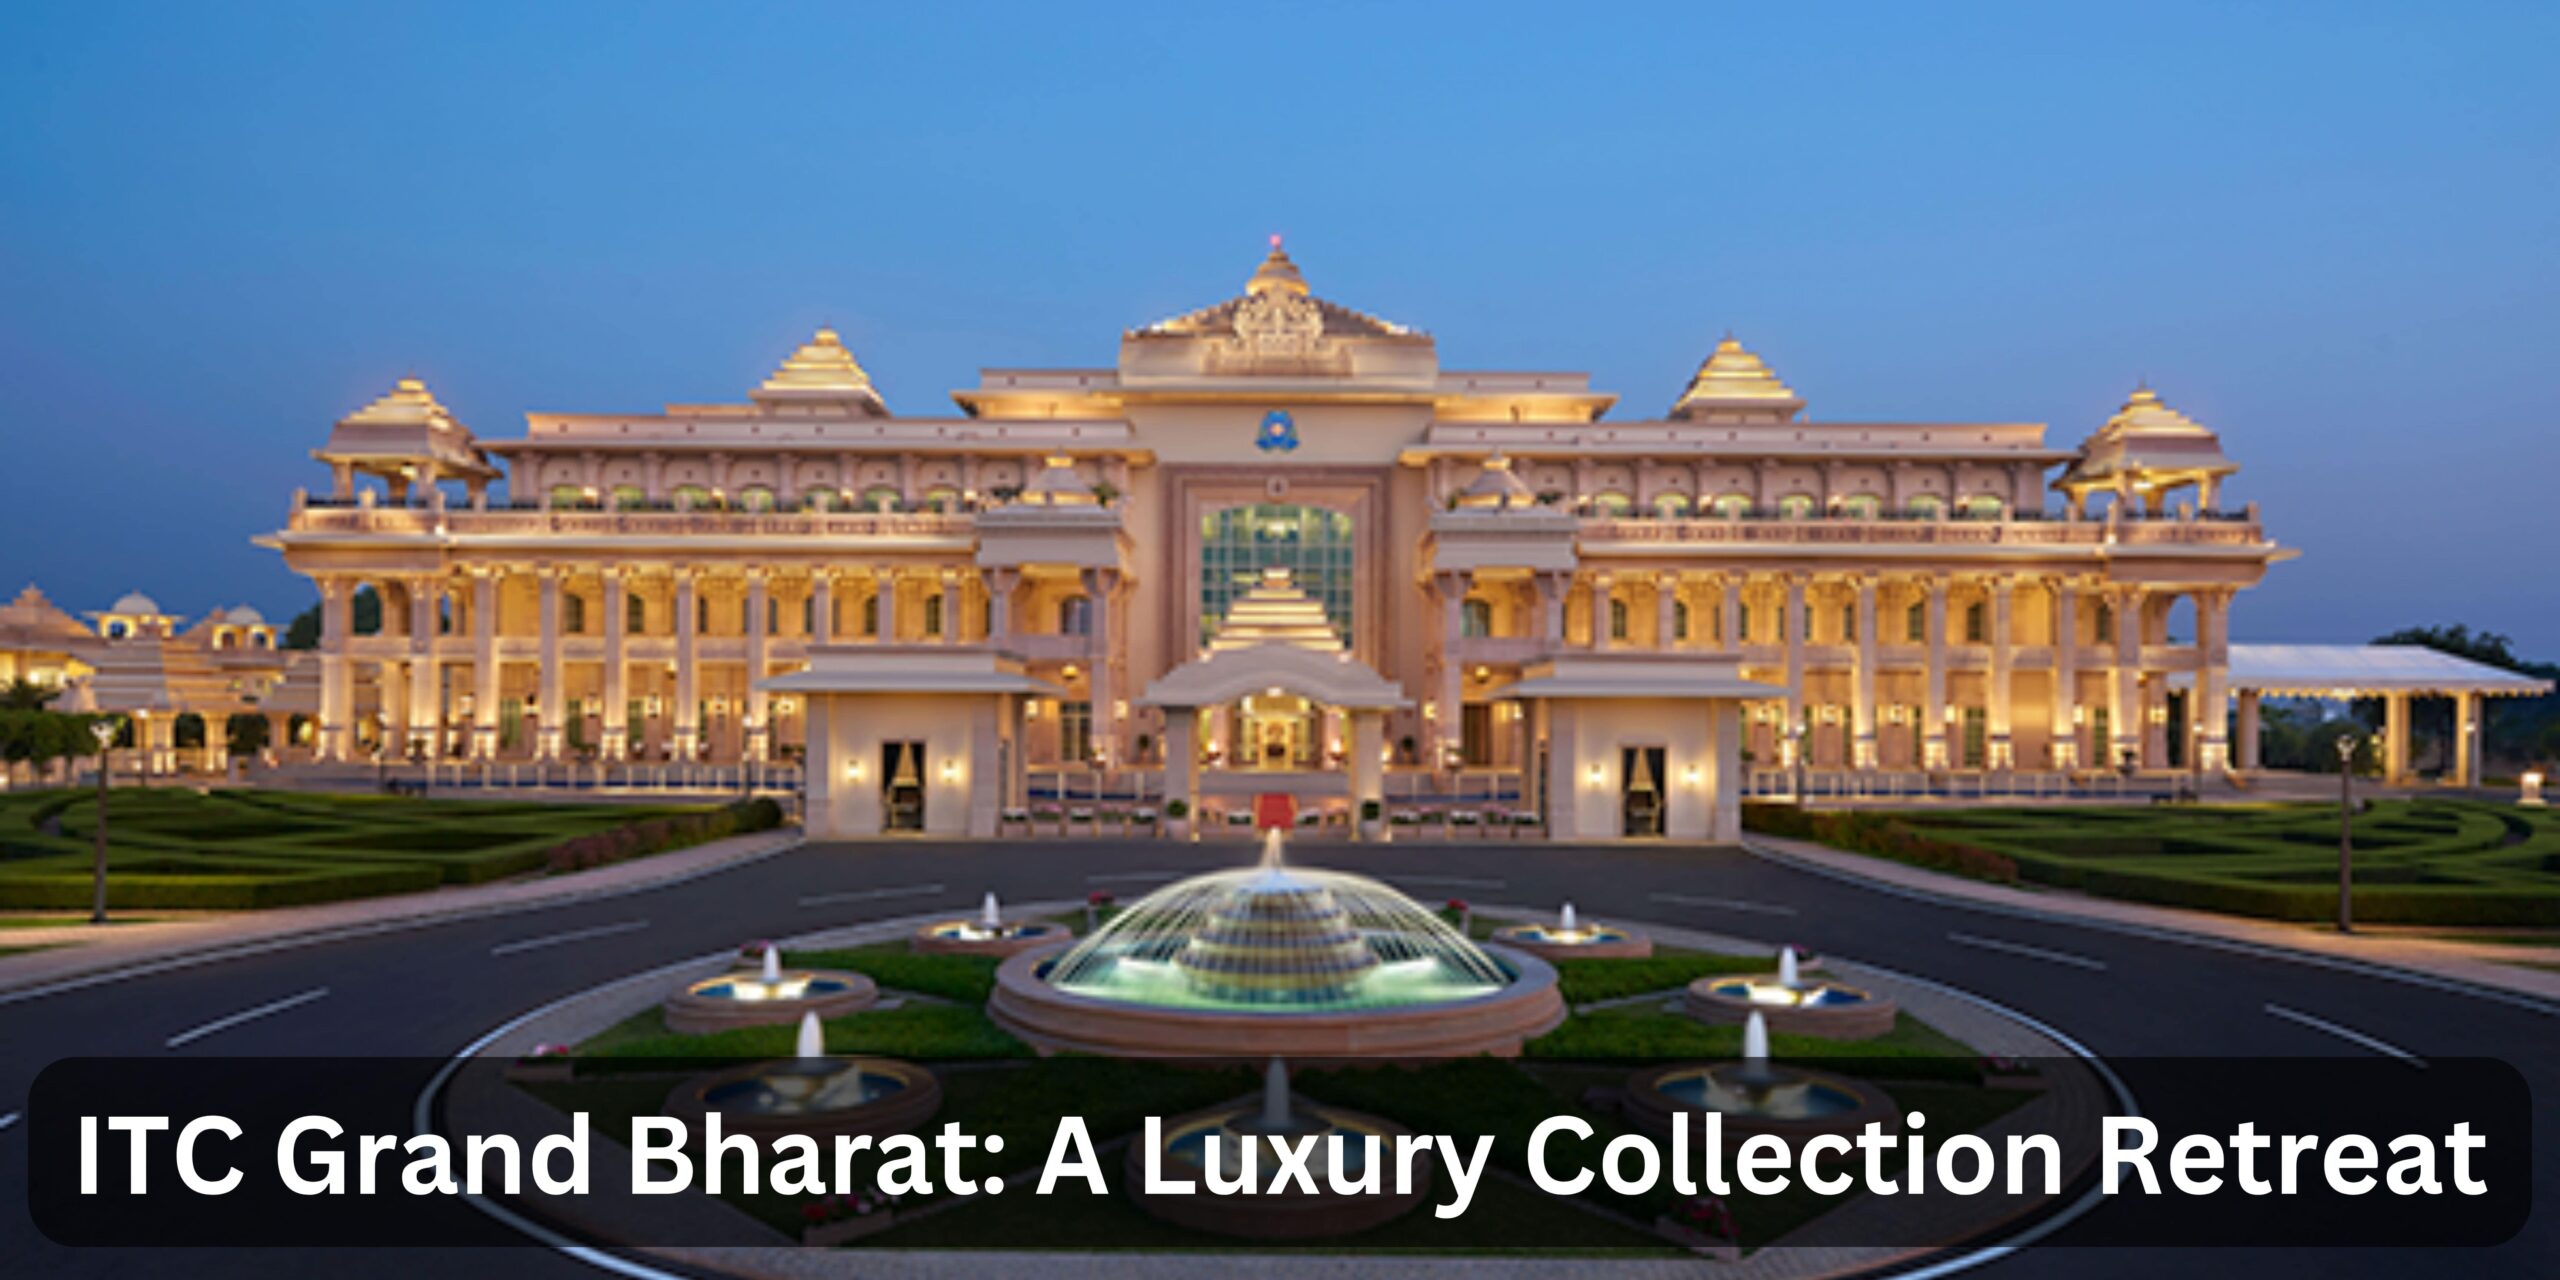 ITC Grand Bharat: A Luxury Collection Retreat